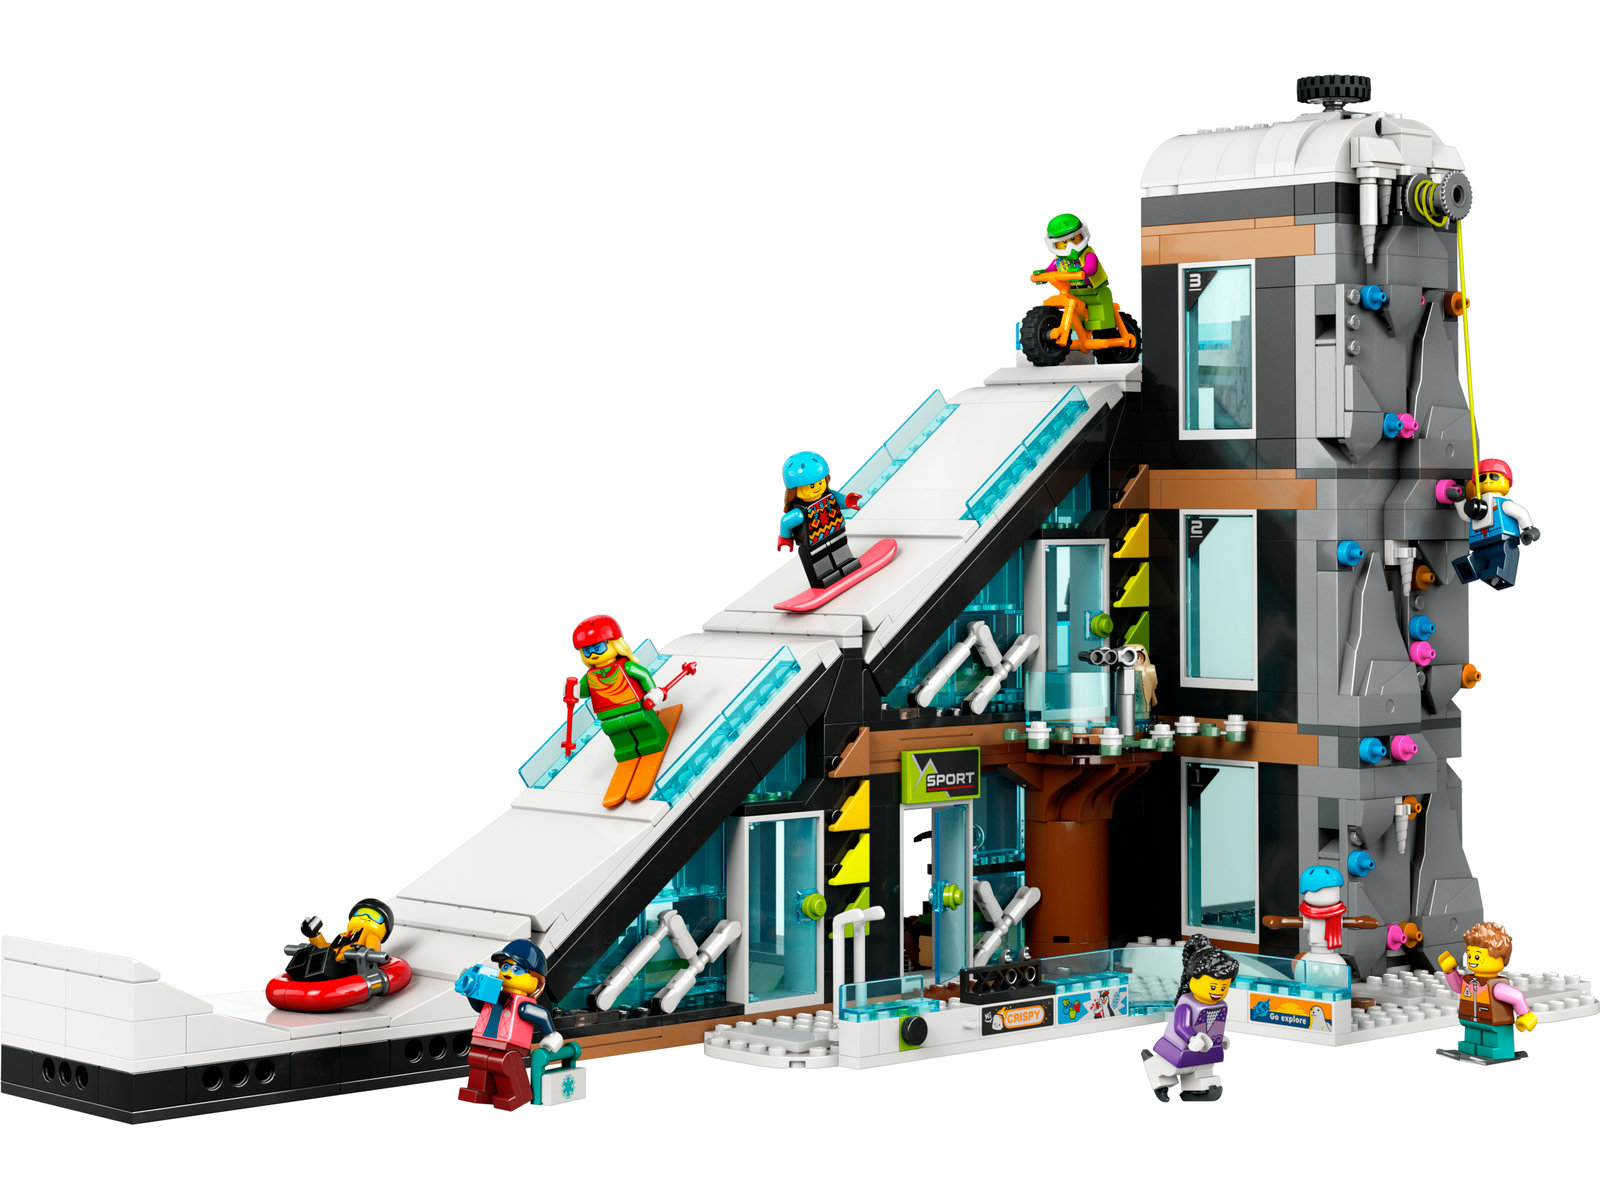 LEGO® City 60366 - Wintersportpark